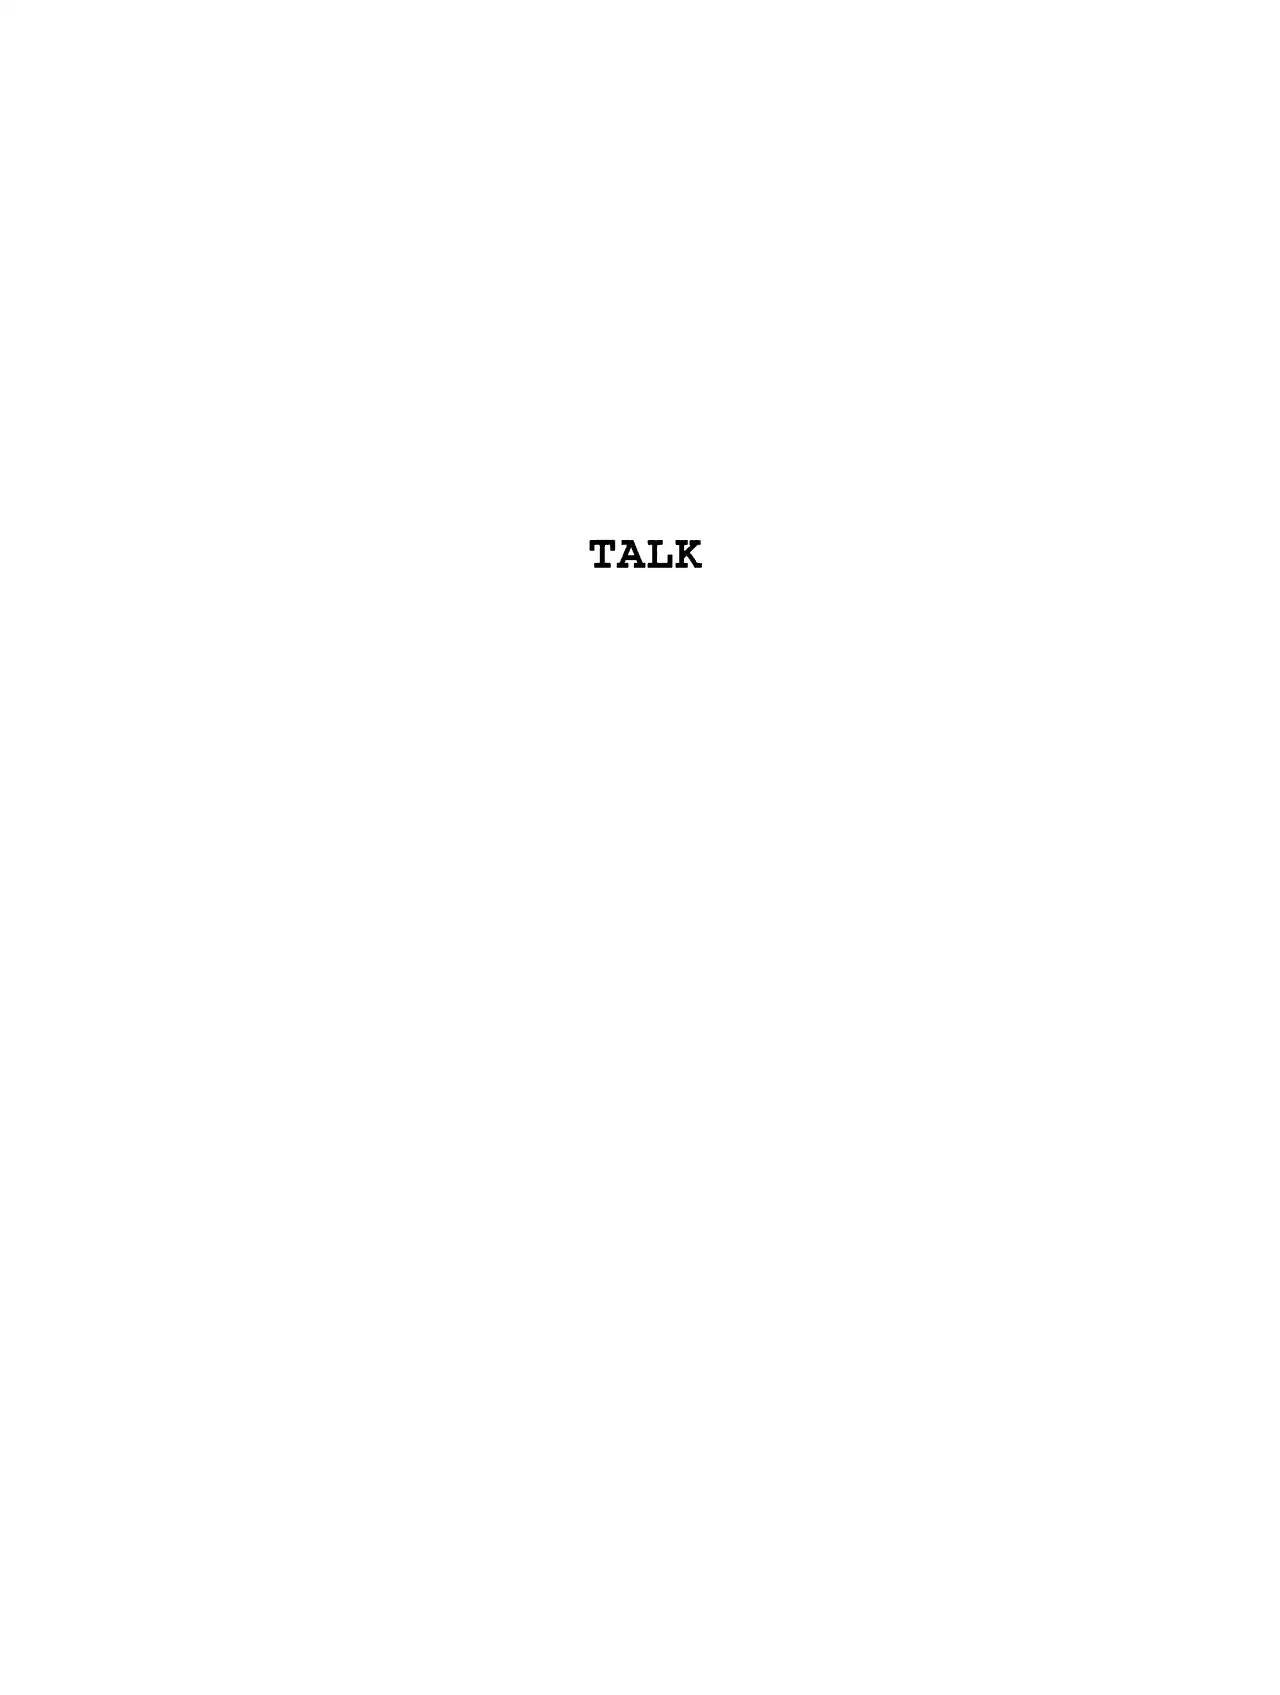 Black Jack Vol.11 Chapter 9: Talk - Picture 1